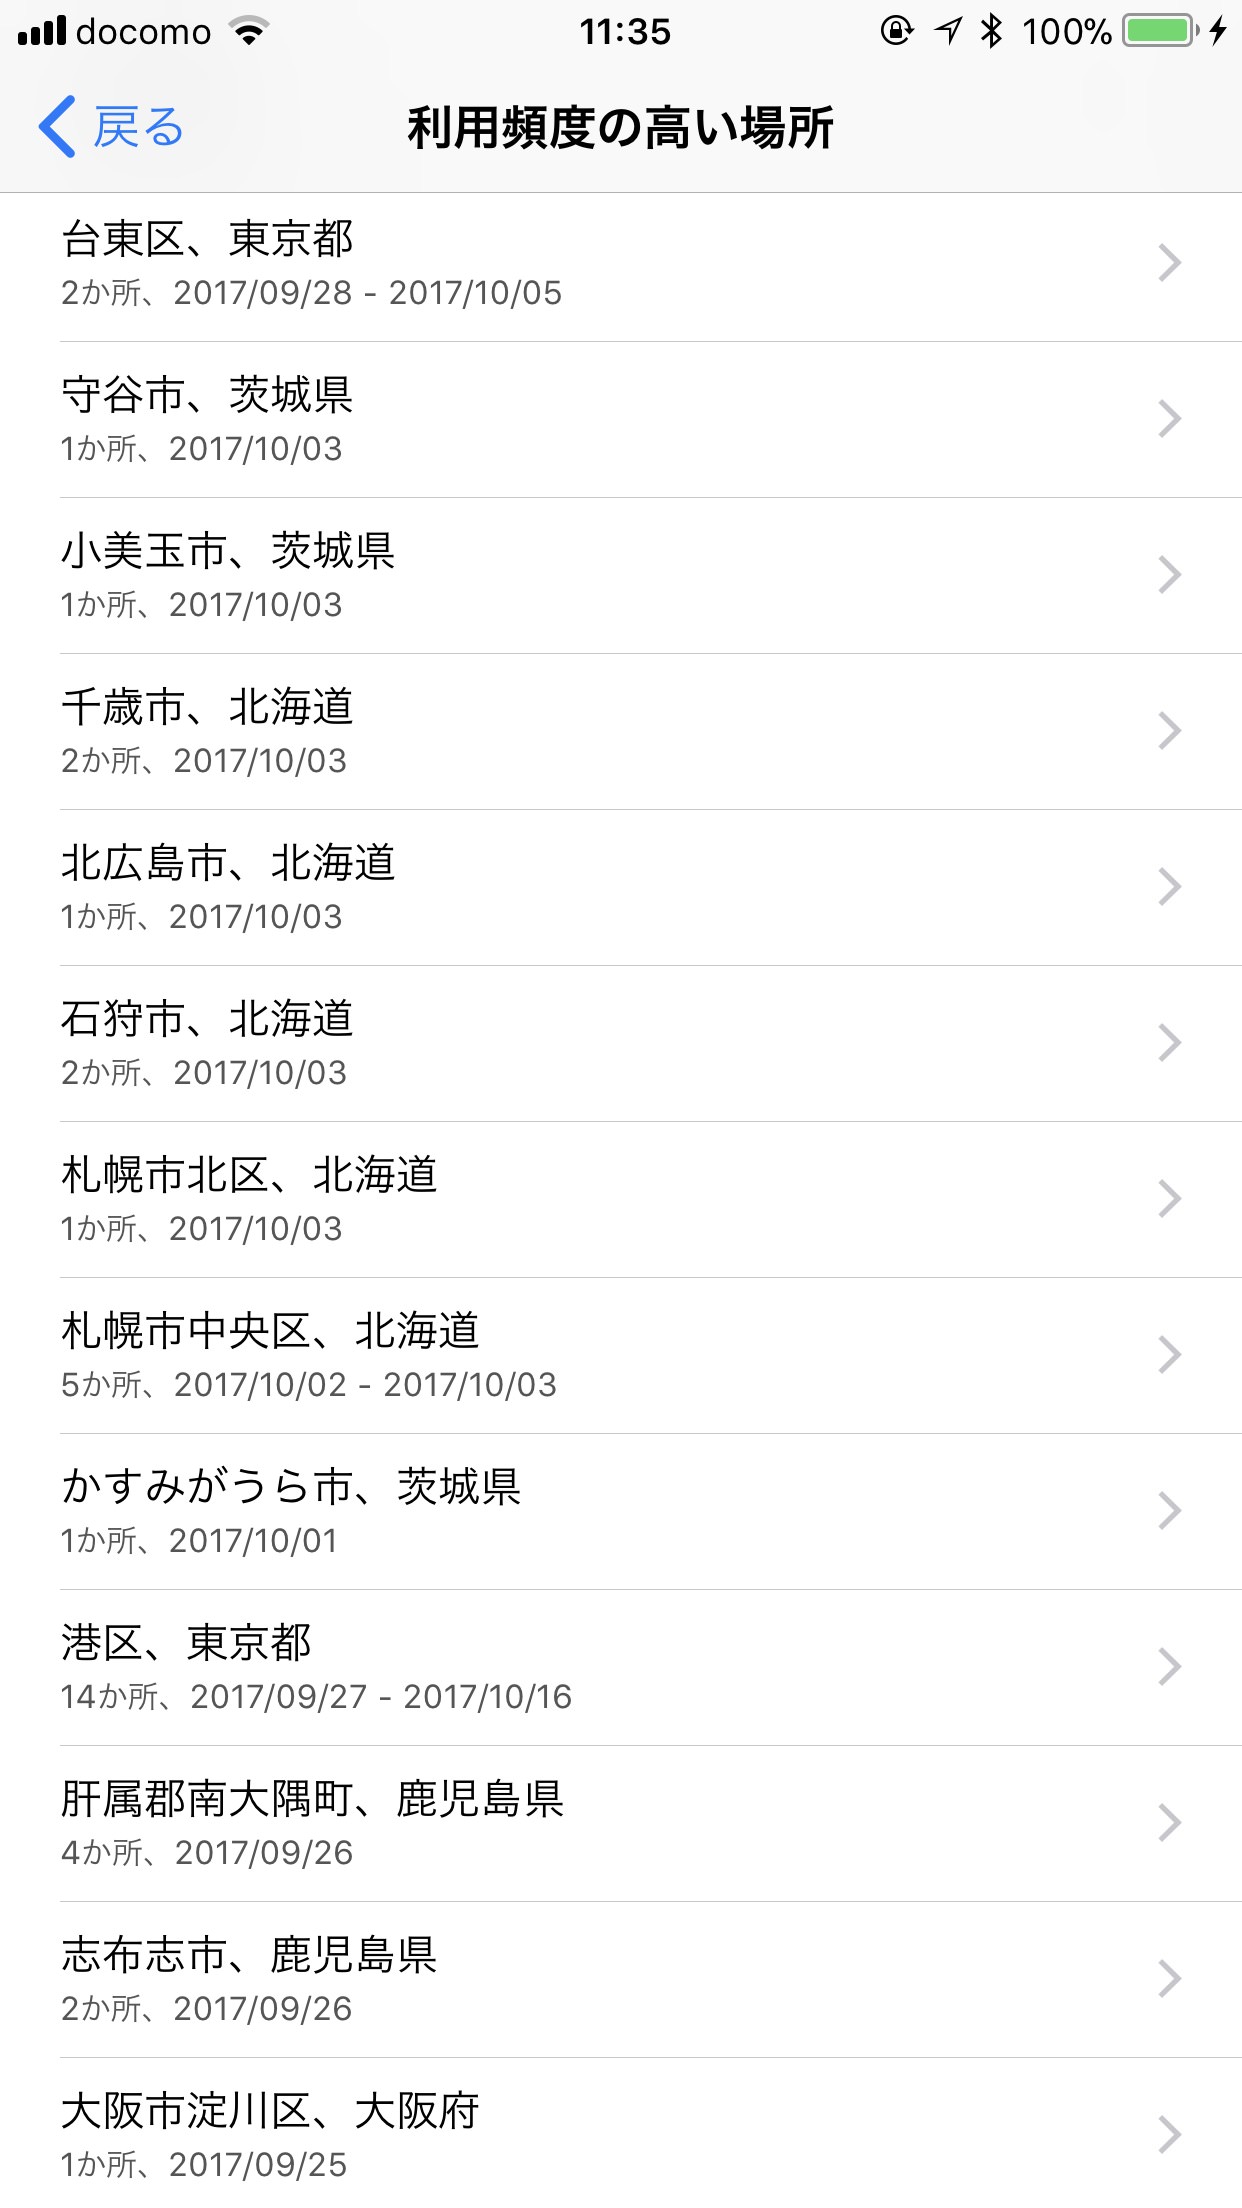 Iphone gps update 9291